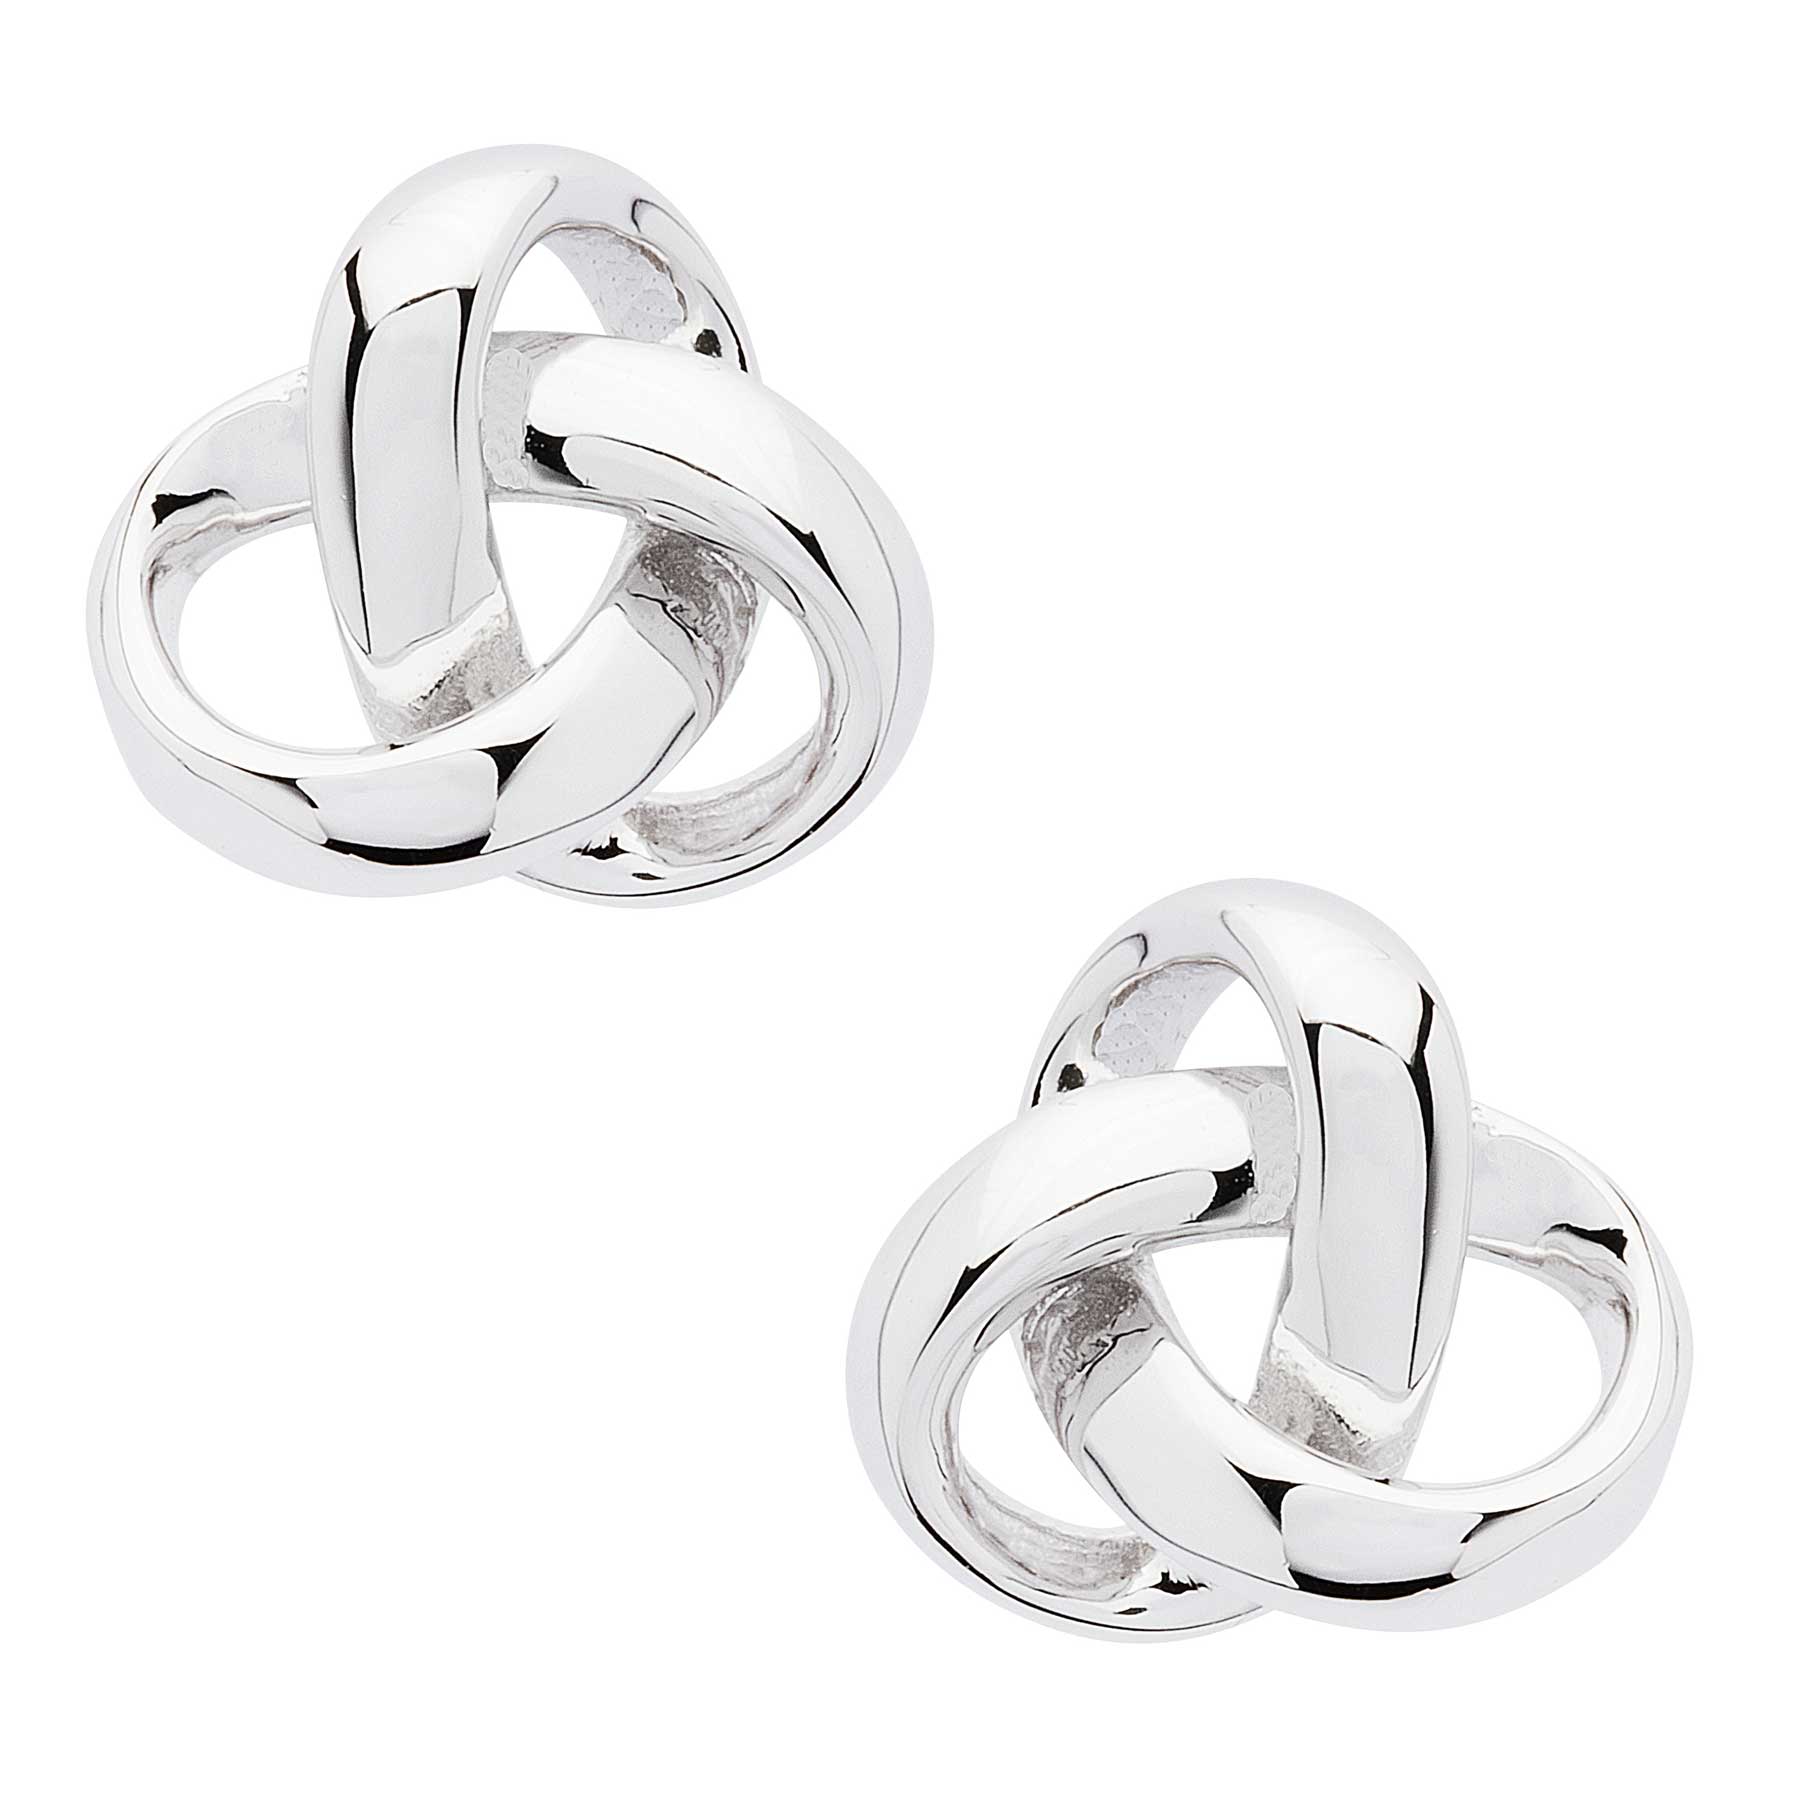 Stainless Steel Irish Celtic Trinity Knot post earrings 